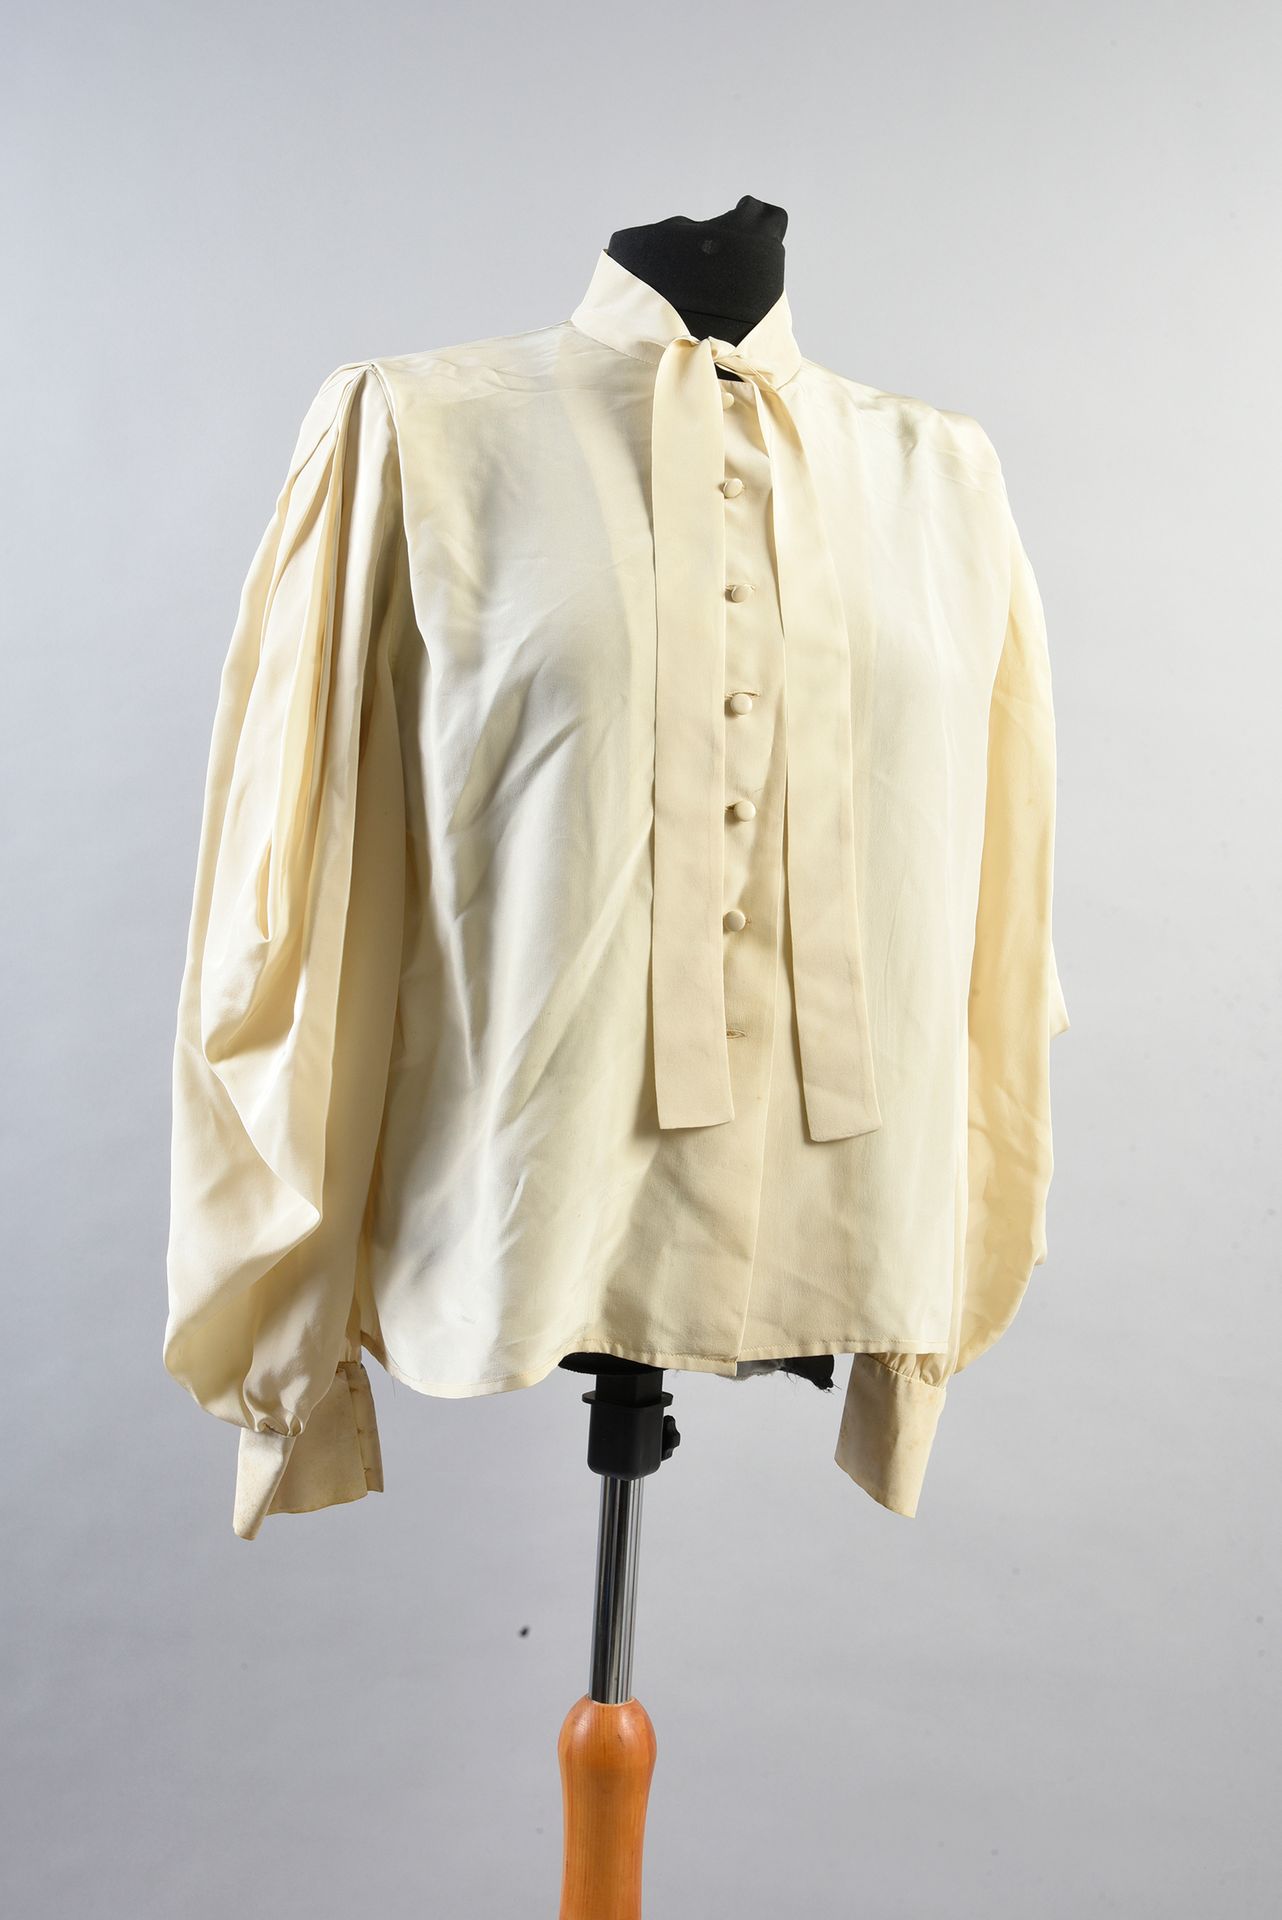 Nina RICCI boutique 
象牙色真丝绉绸拉瓦尔里耶领衬衫，大长袖，有些轻微的缝合。有一件白色的羊毛长衫，有圆领和3/4长的袖子，还有一件赤褐色的&hellip;